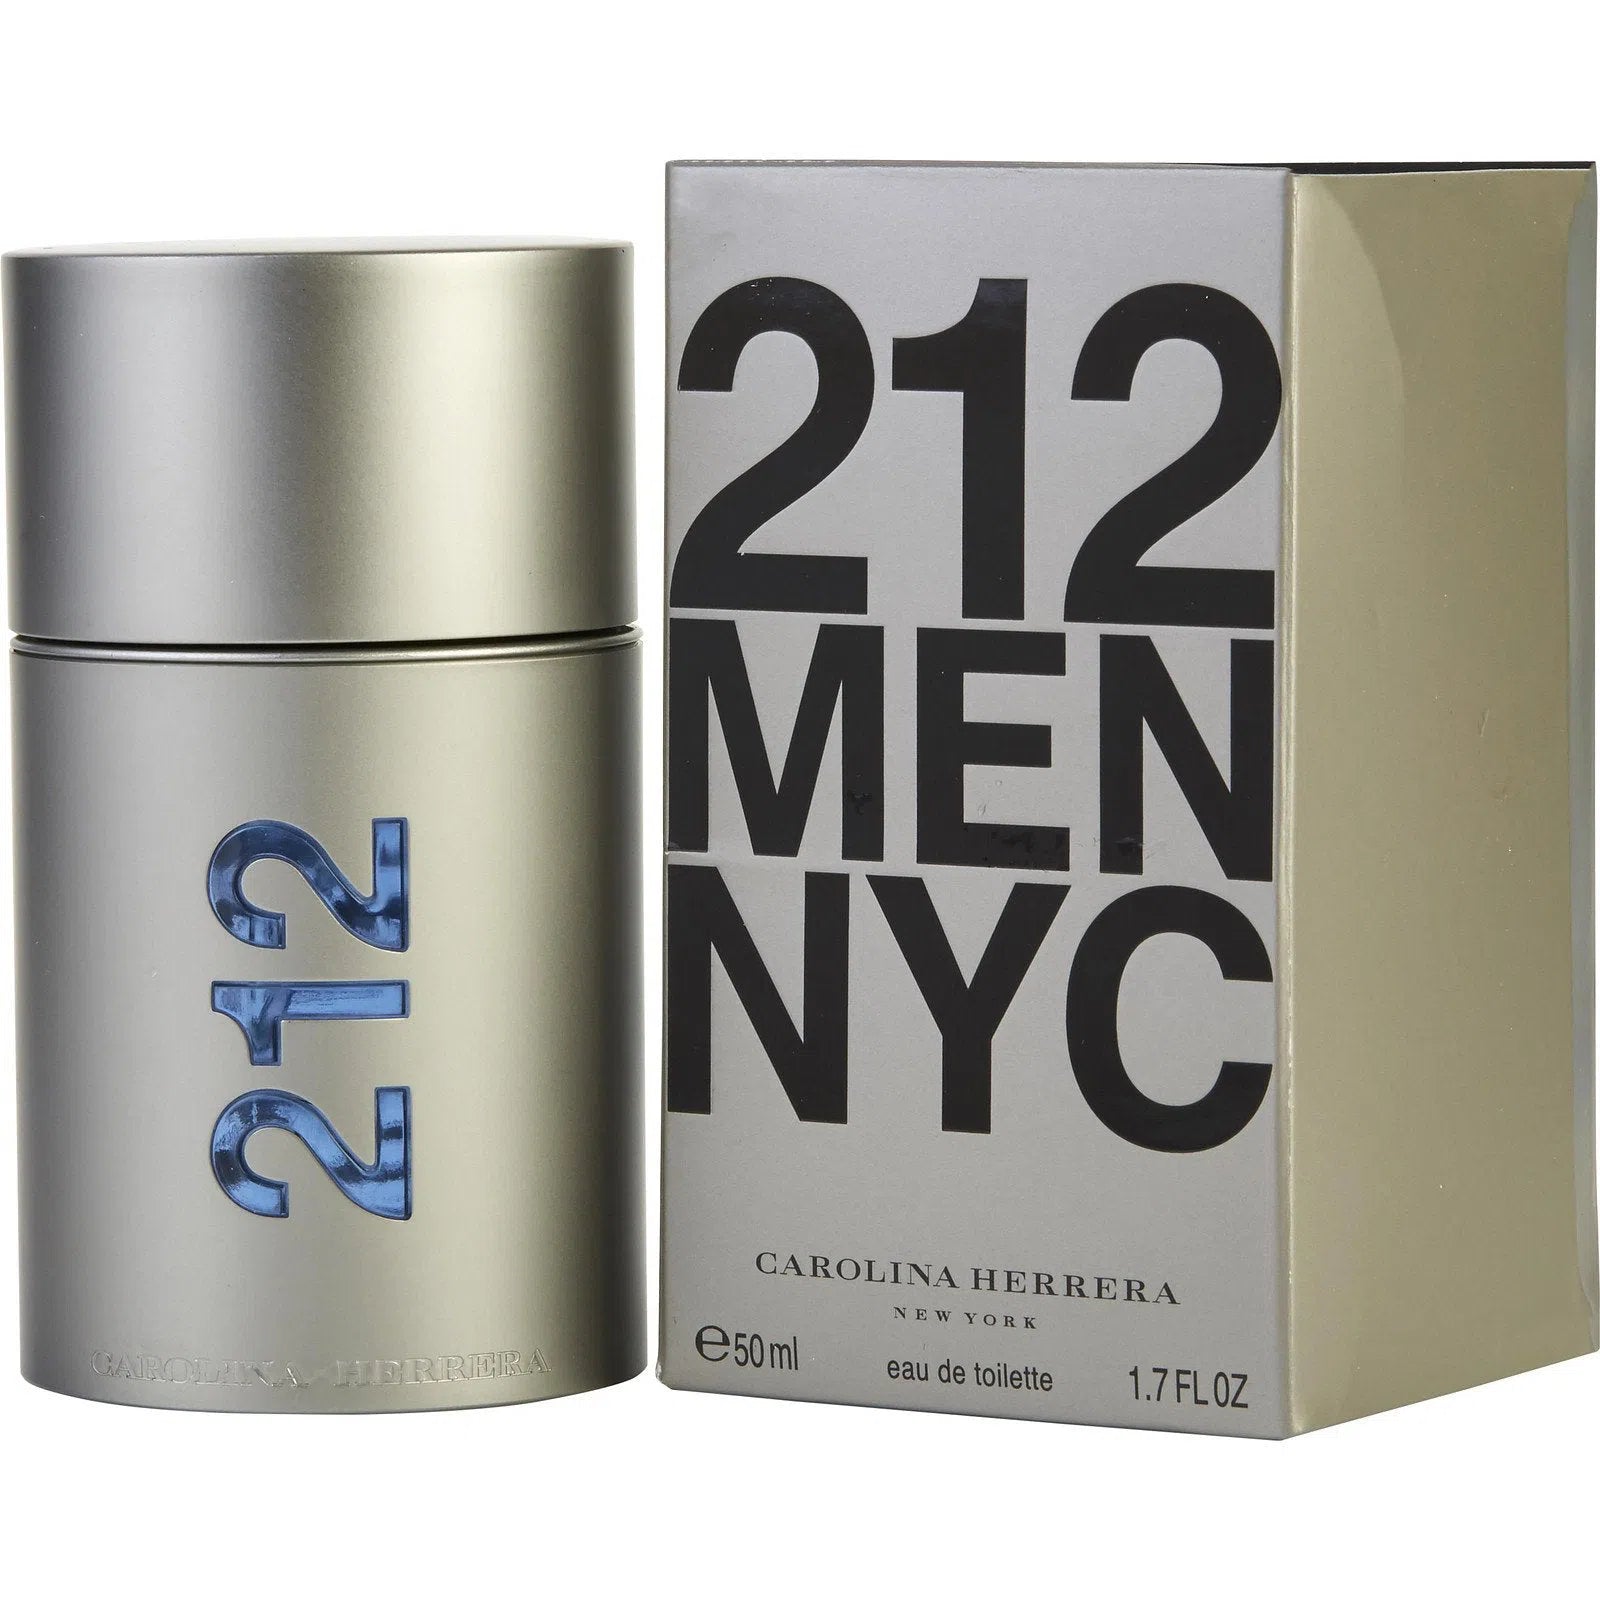 Perfume Carolina Herrera 212 Men NYC EDT (M) / 50 ml - 8411061896259- Prive Perfumes Honduras